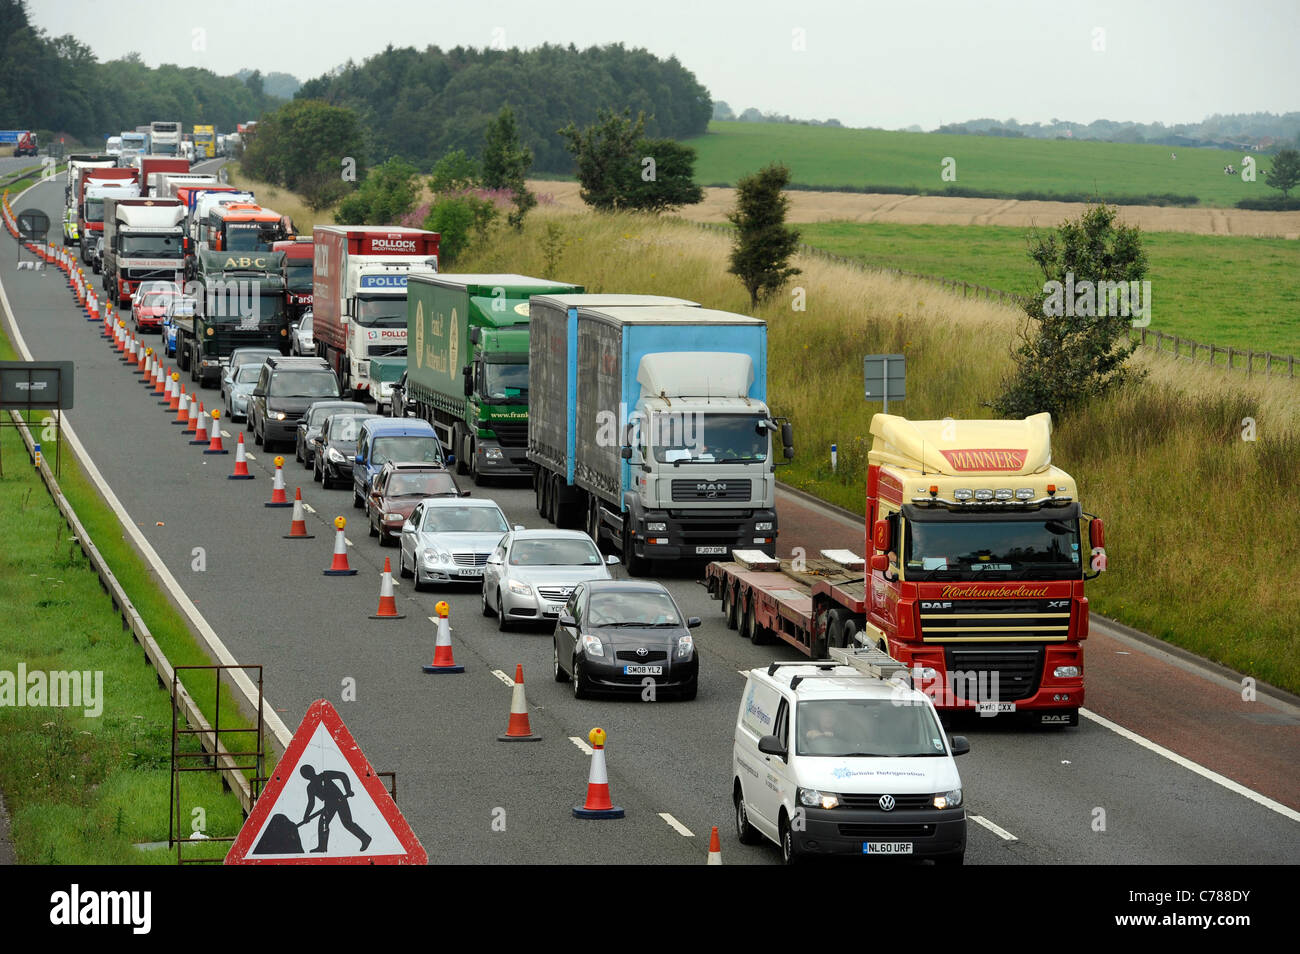 Traffic queue on motorway in contraflow due to roadworks Stock Photo